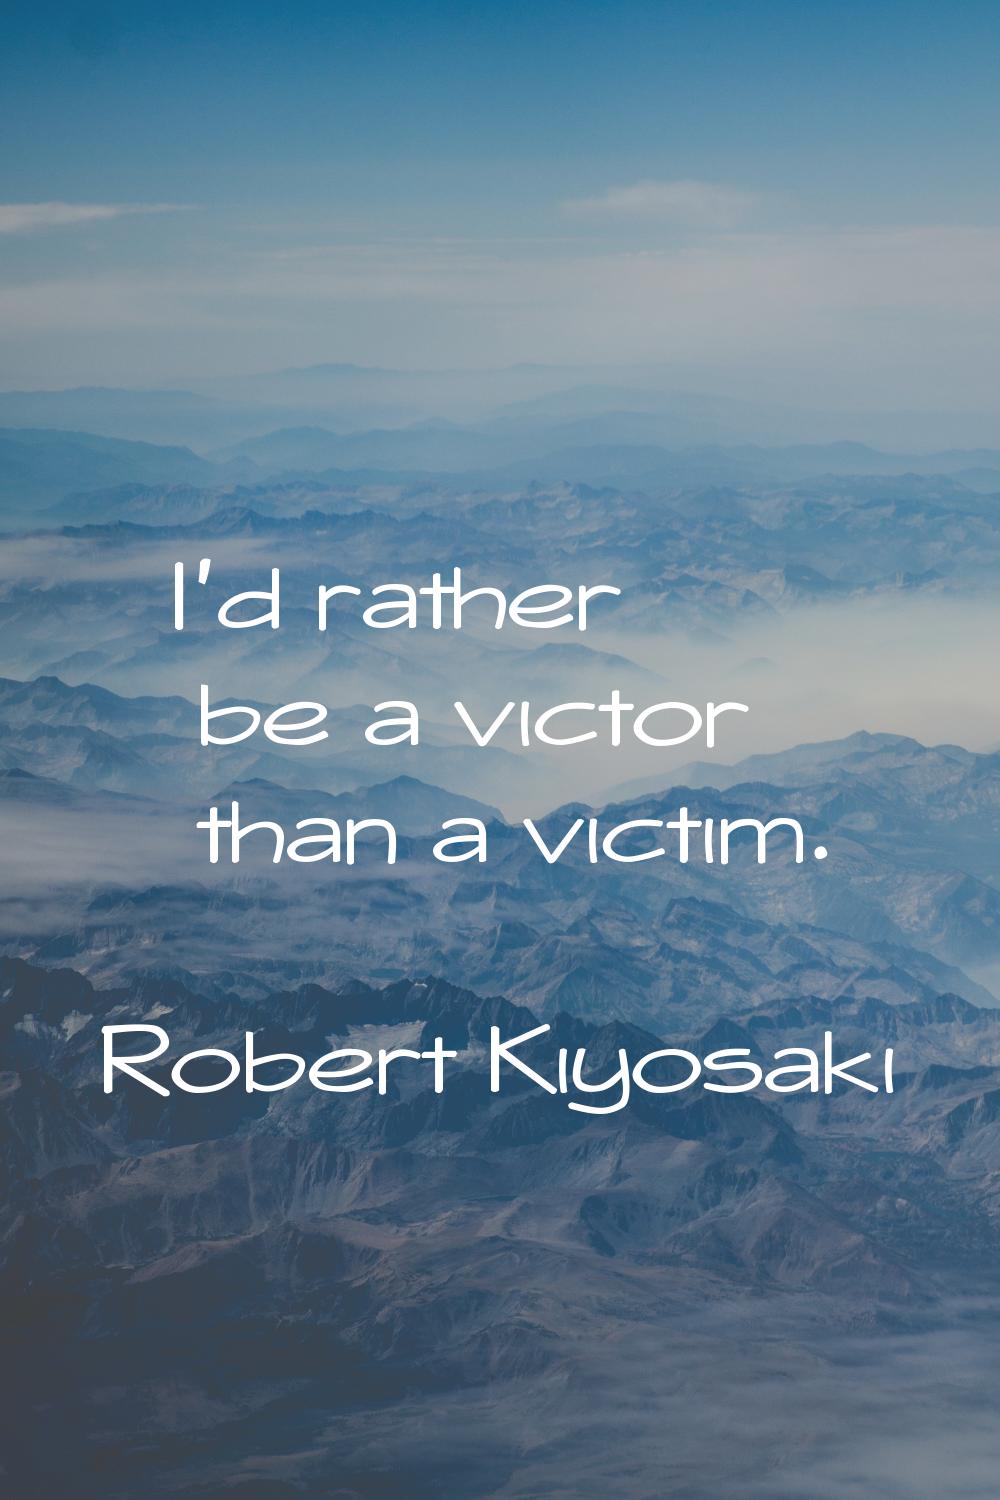 I'd rather be a victor than a victim.